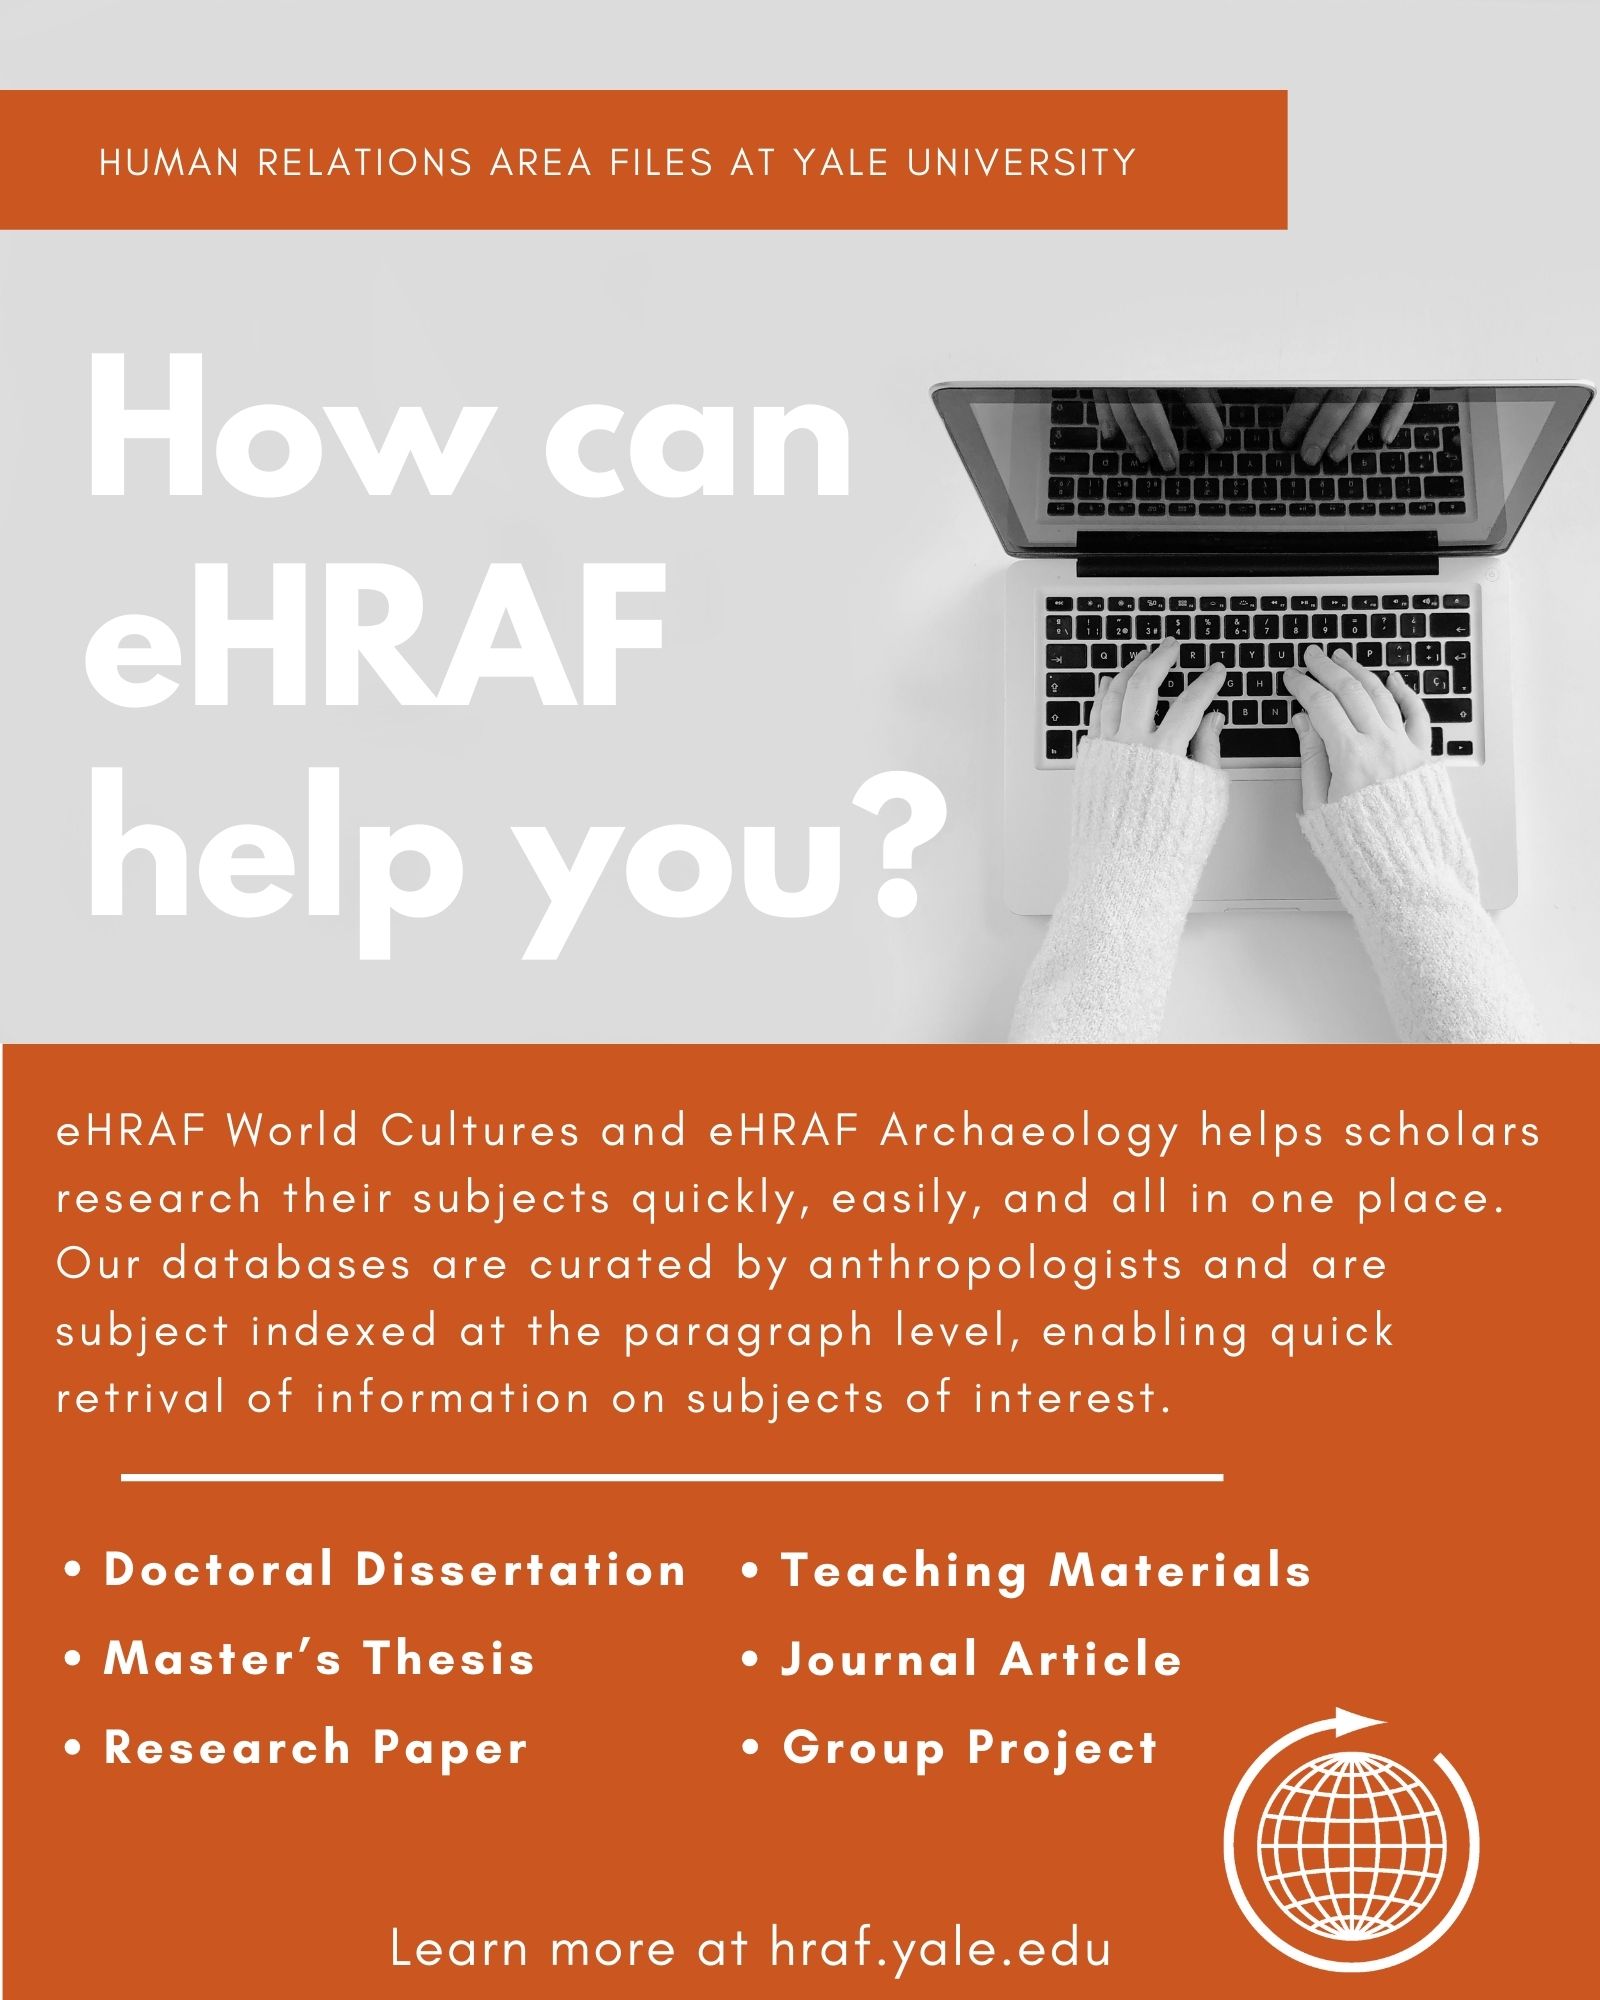 How can eHRAF help you